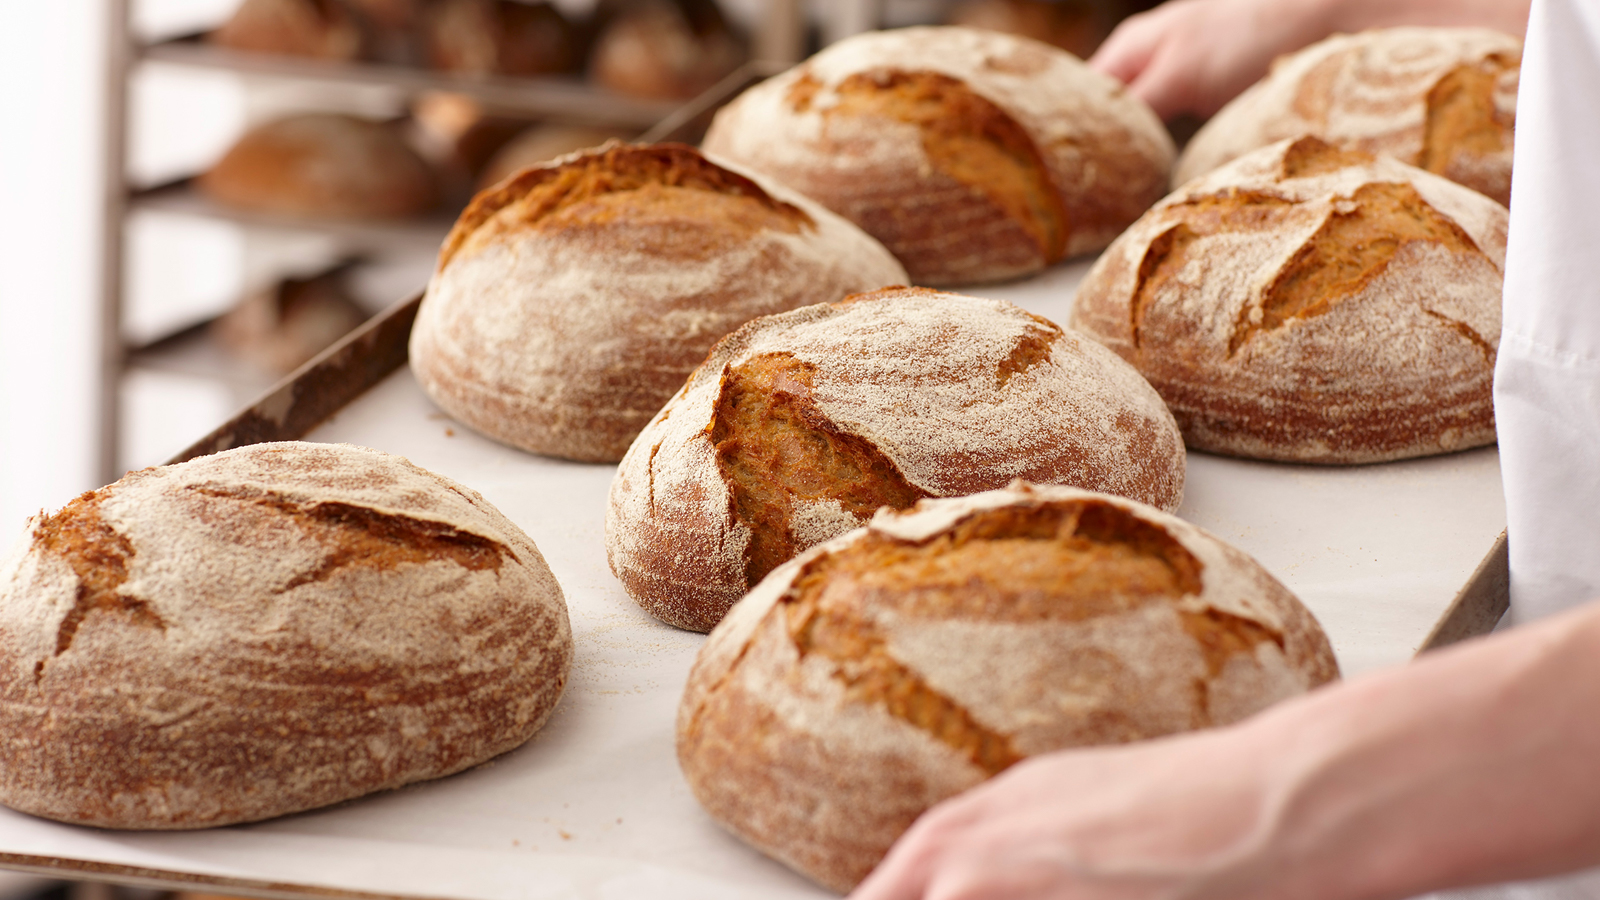 Panera Bread's new design transforms it into a neighborhood bakery